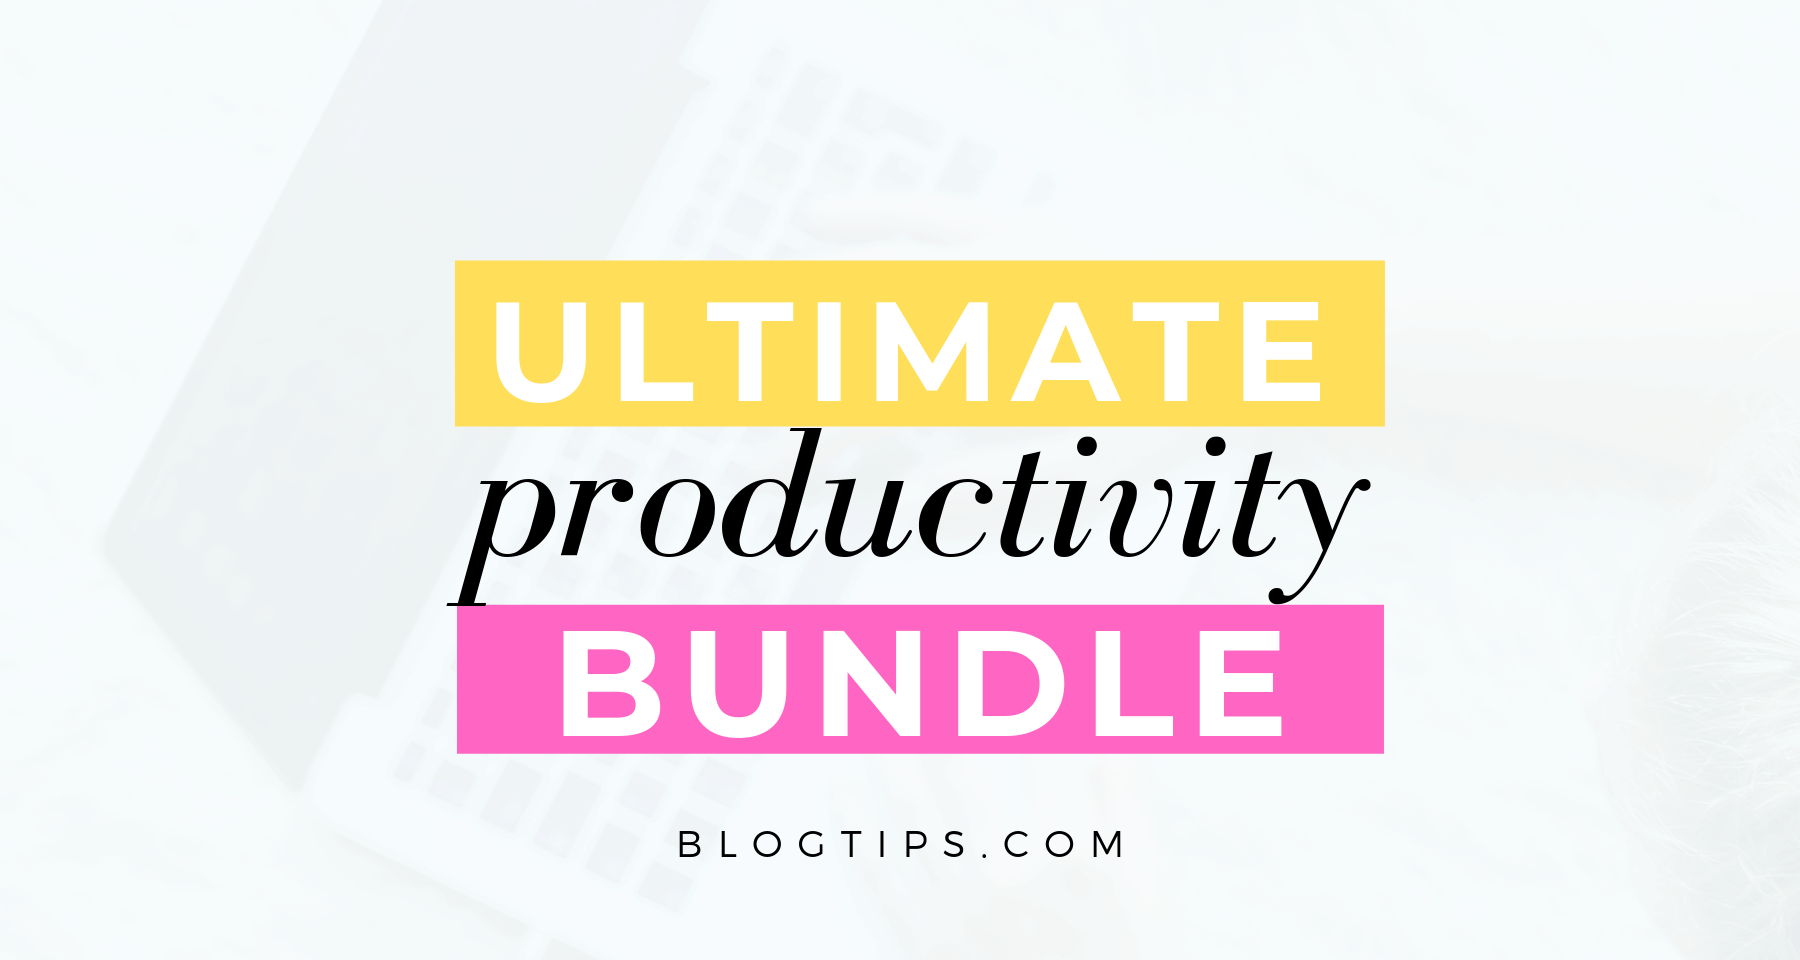 Ultimate productivity bundle